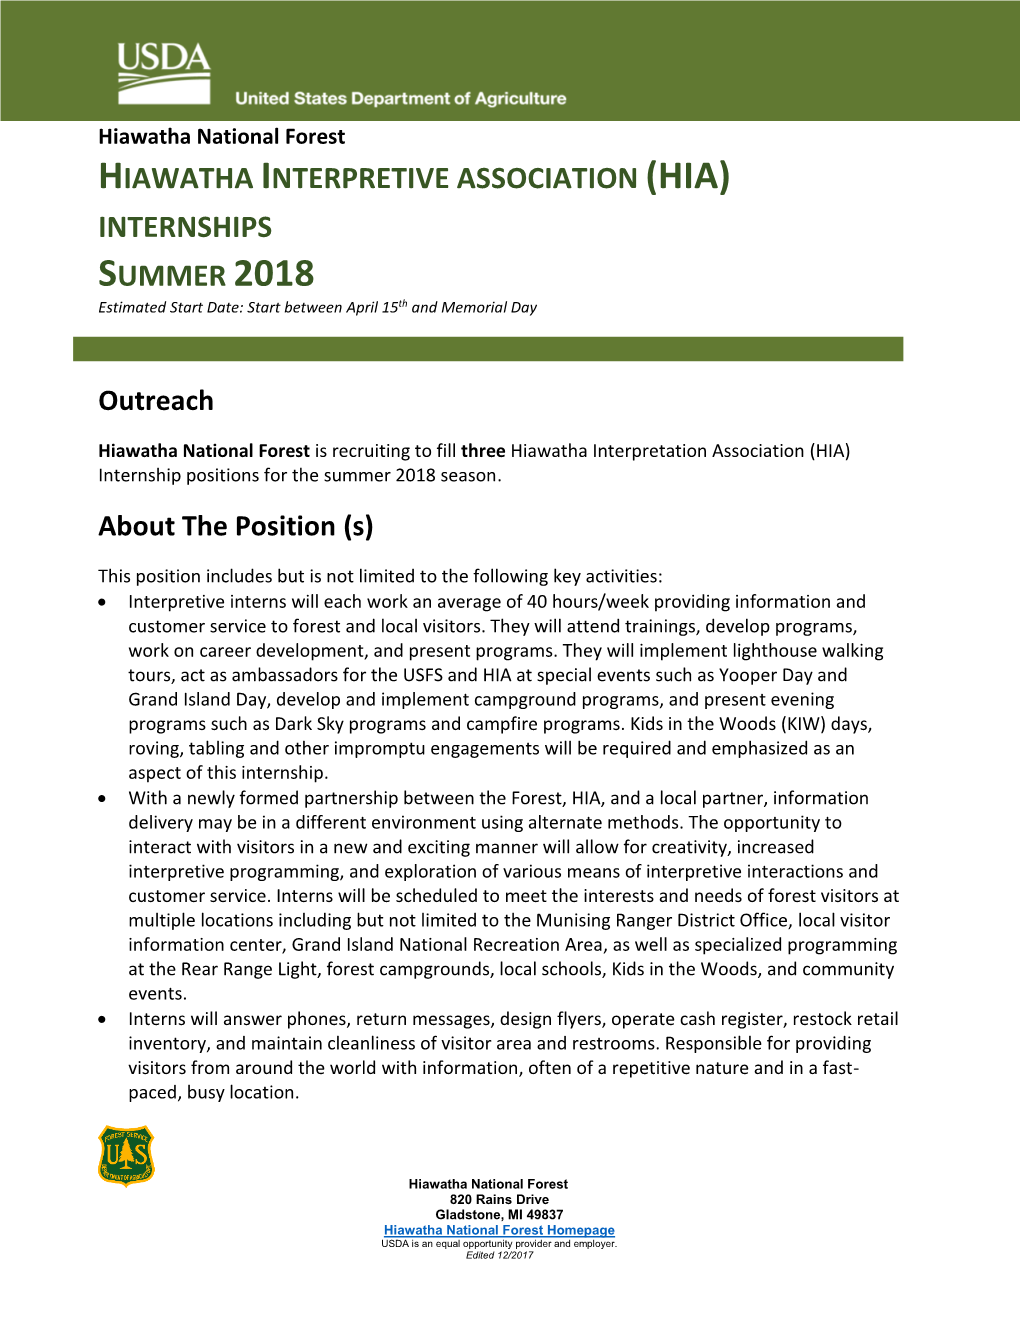 HIAWATHA INTERPRETIVE ASSOCIATION (HIA) INTERNSHIPS SUMMER 2018 Estimated Start Date: Start Between April 15Th and Memorial Day